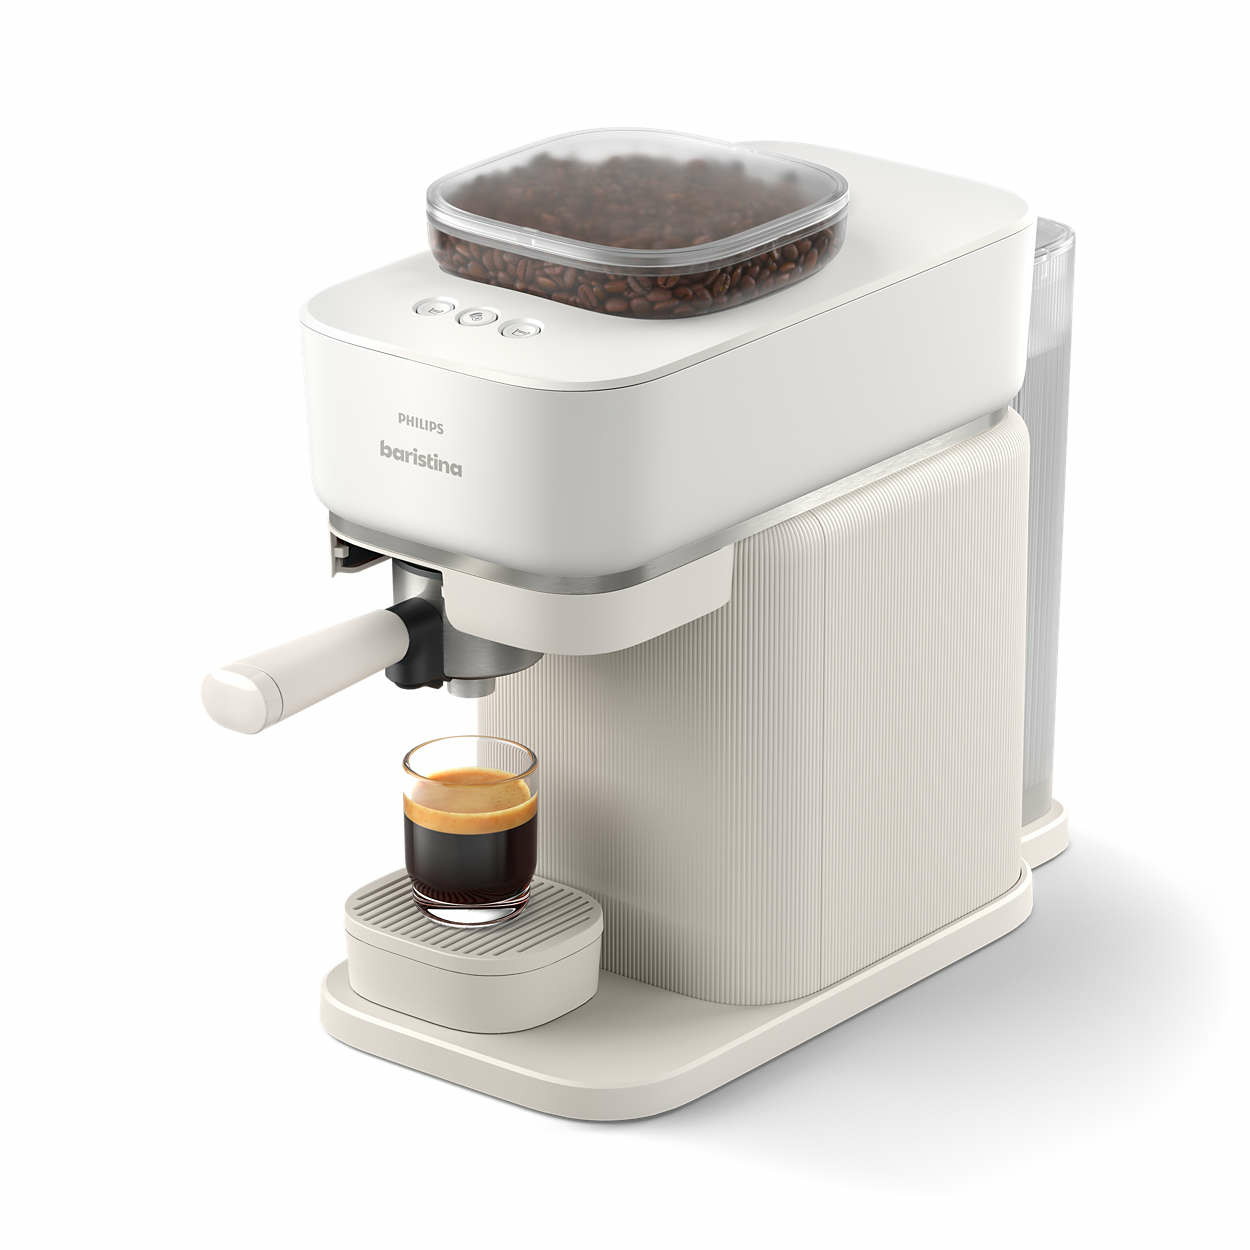 Philips BAR302/20 coffee maker